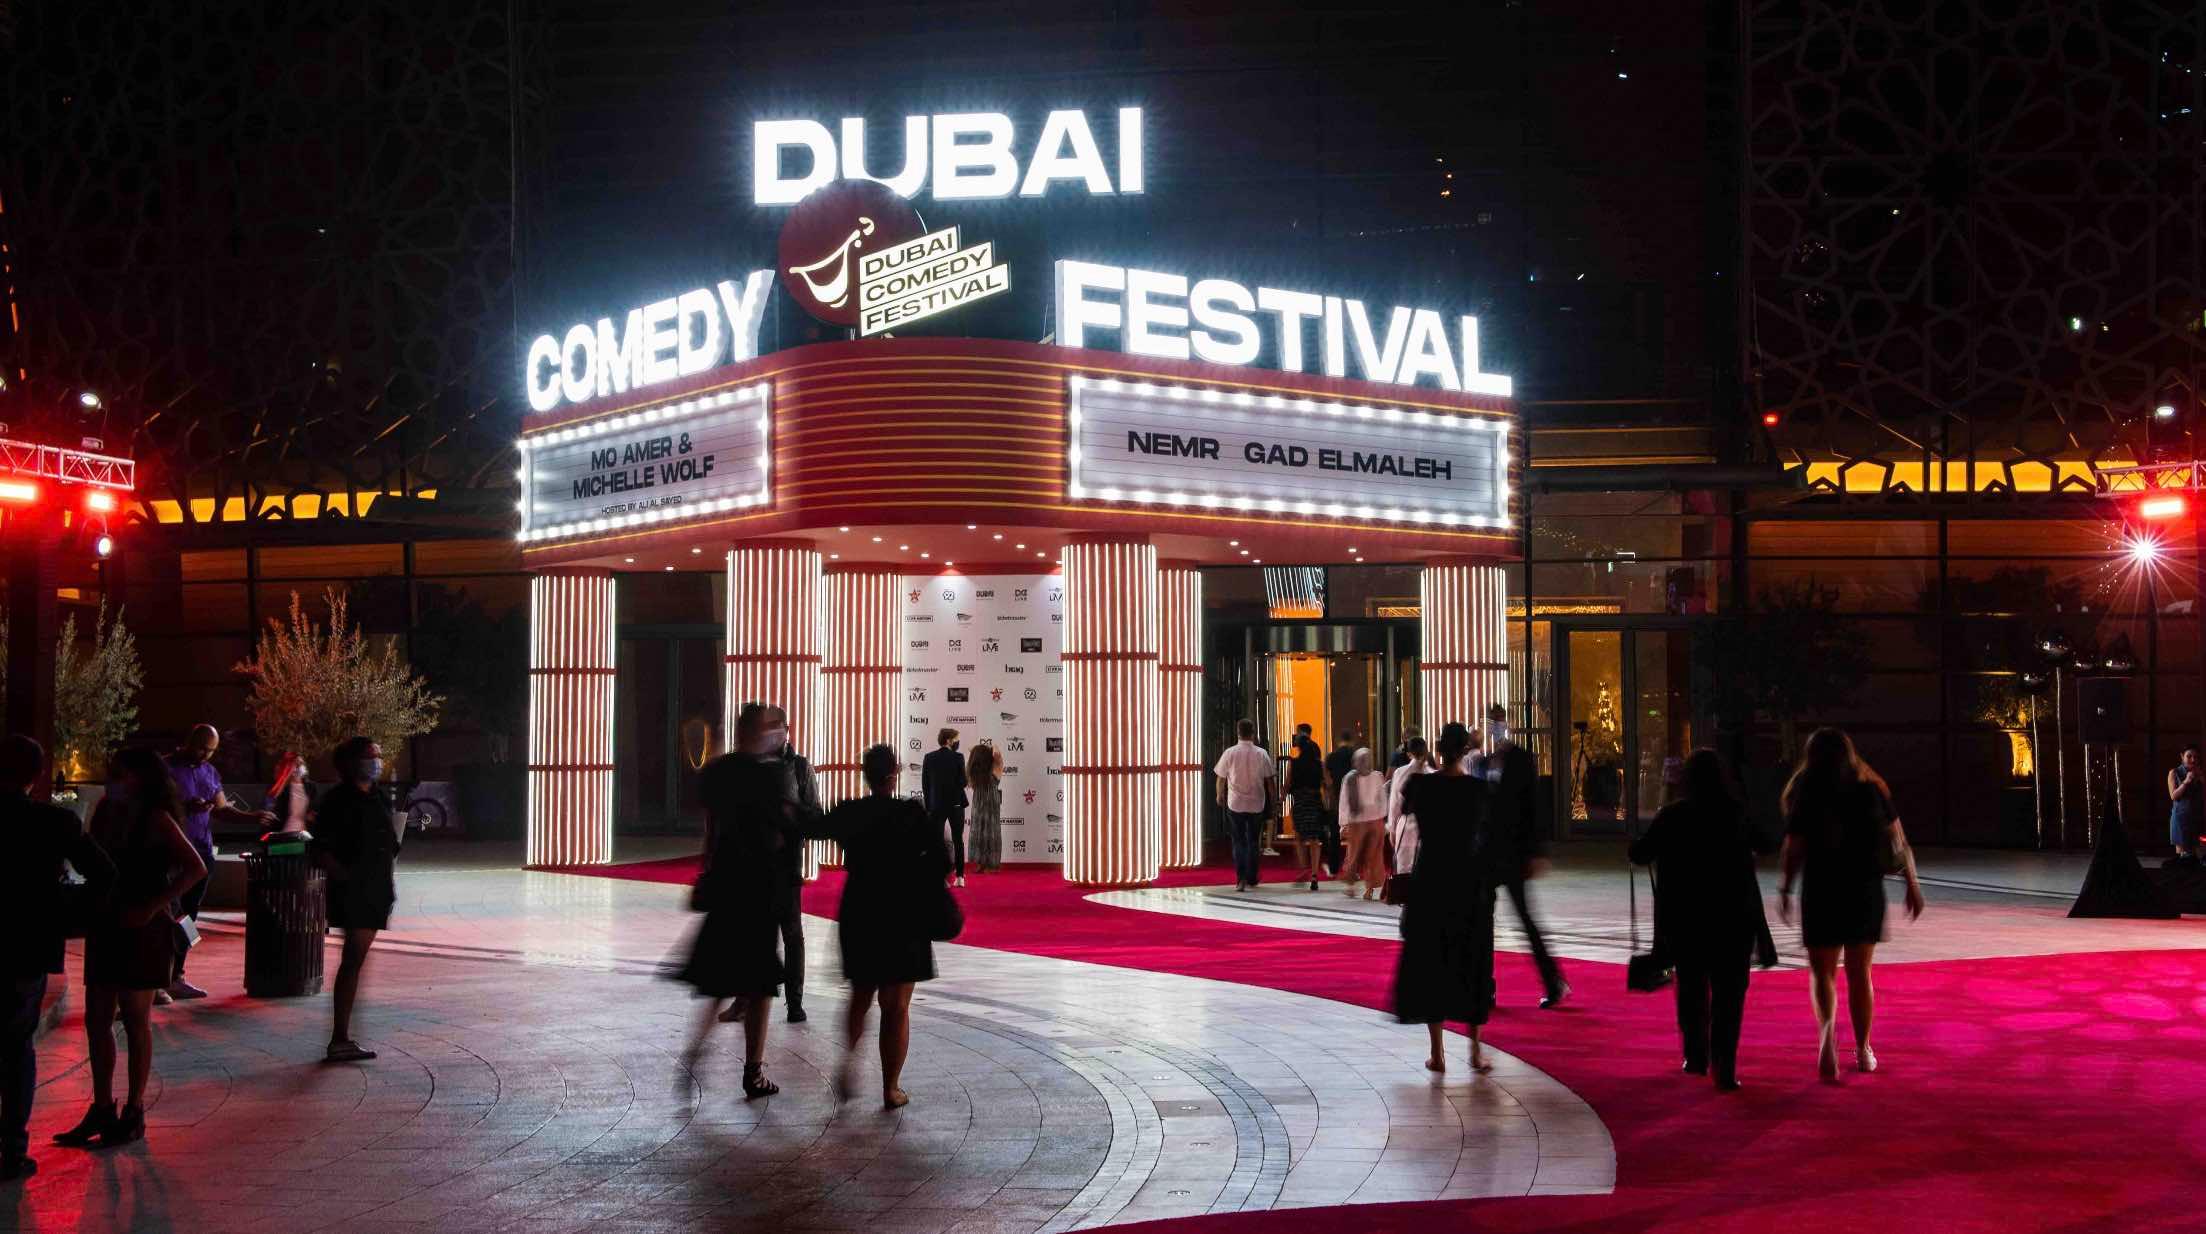 Meet the headliners of the upcoming Dubai Comedy Festival